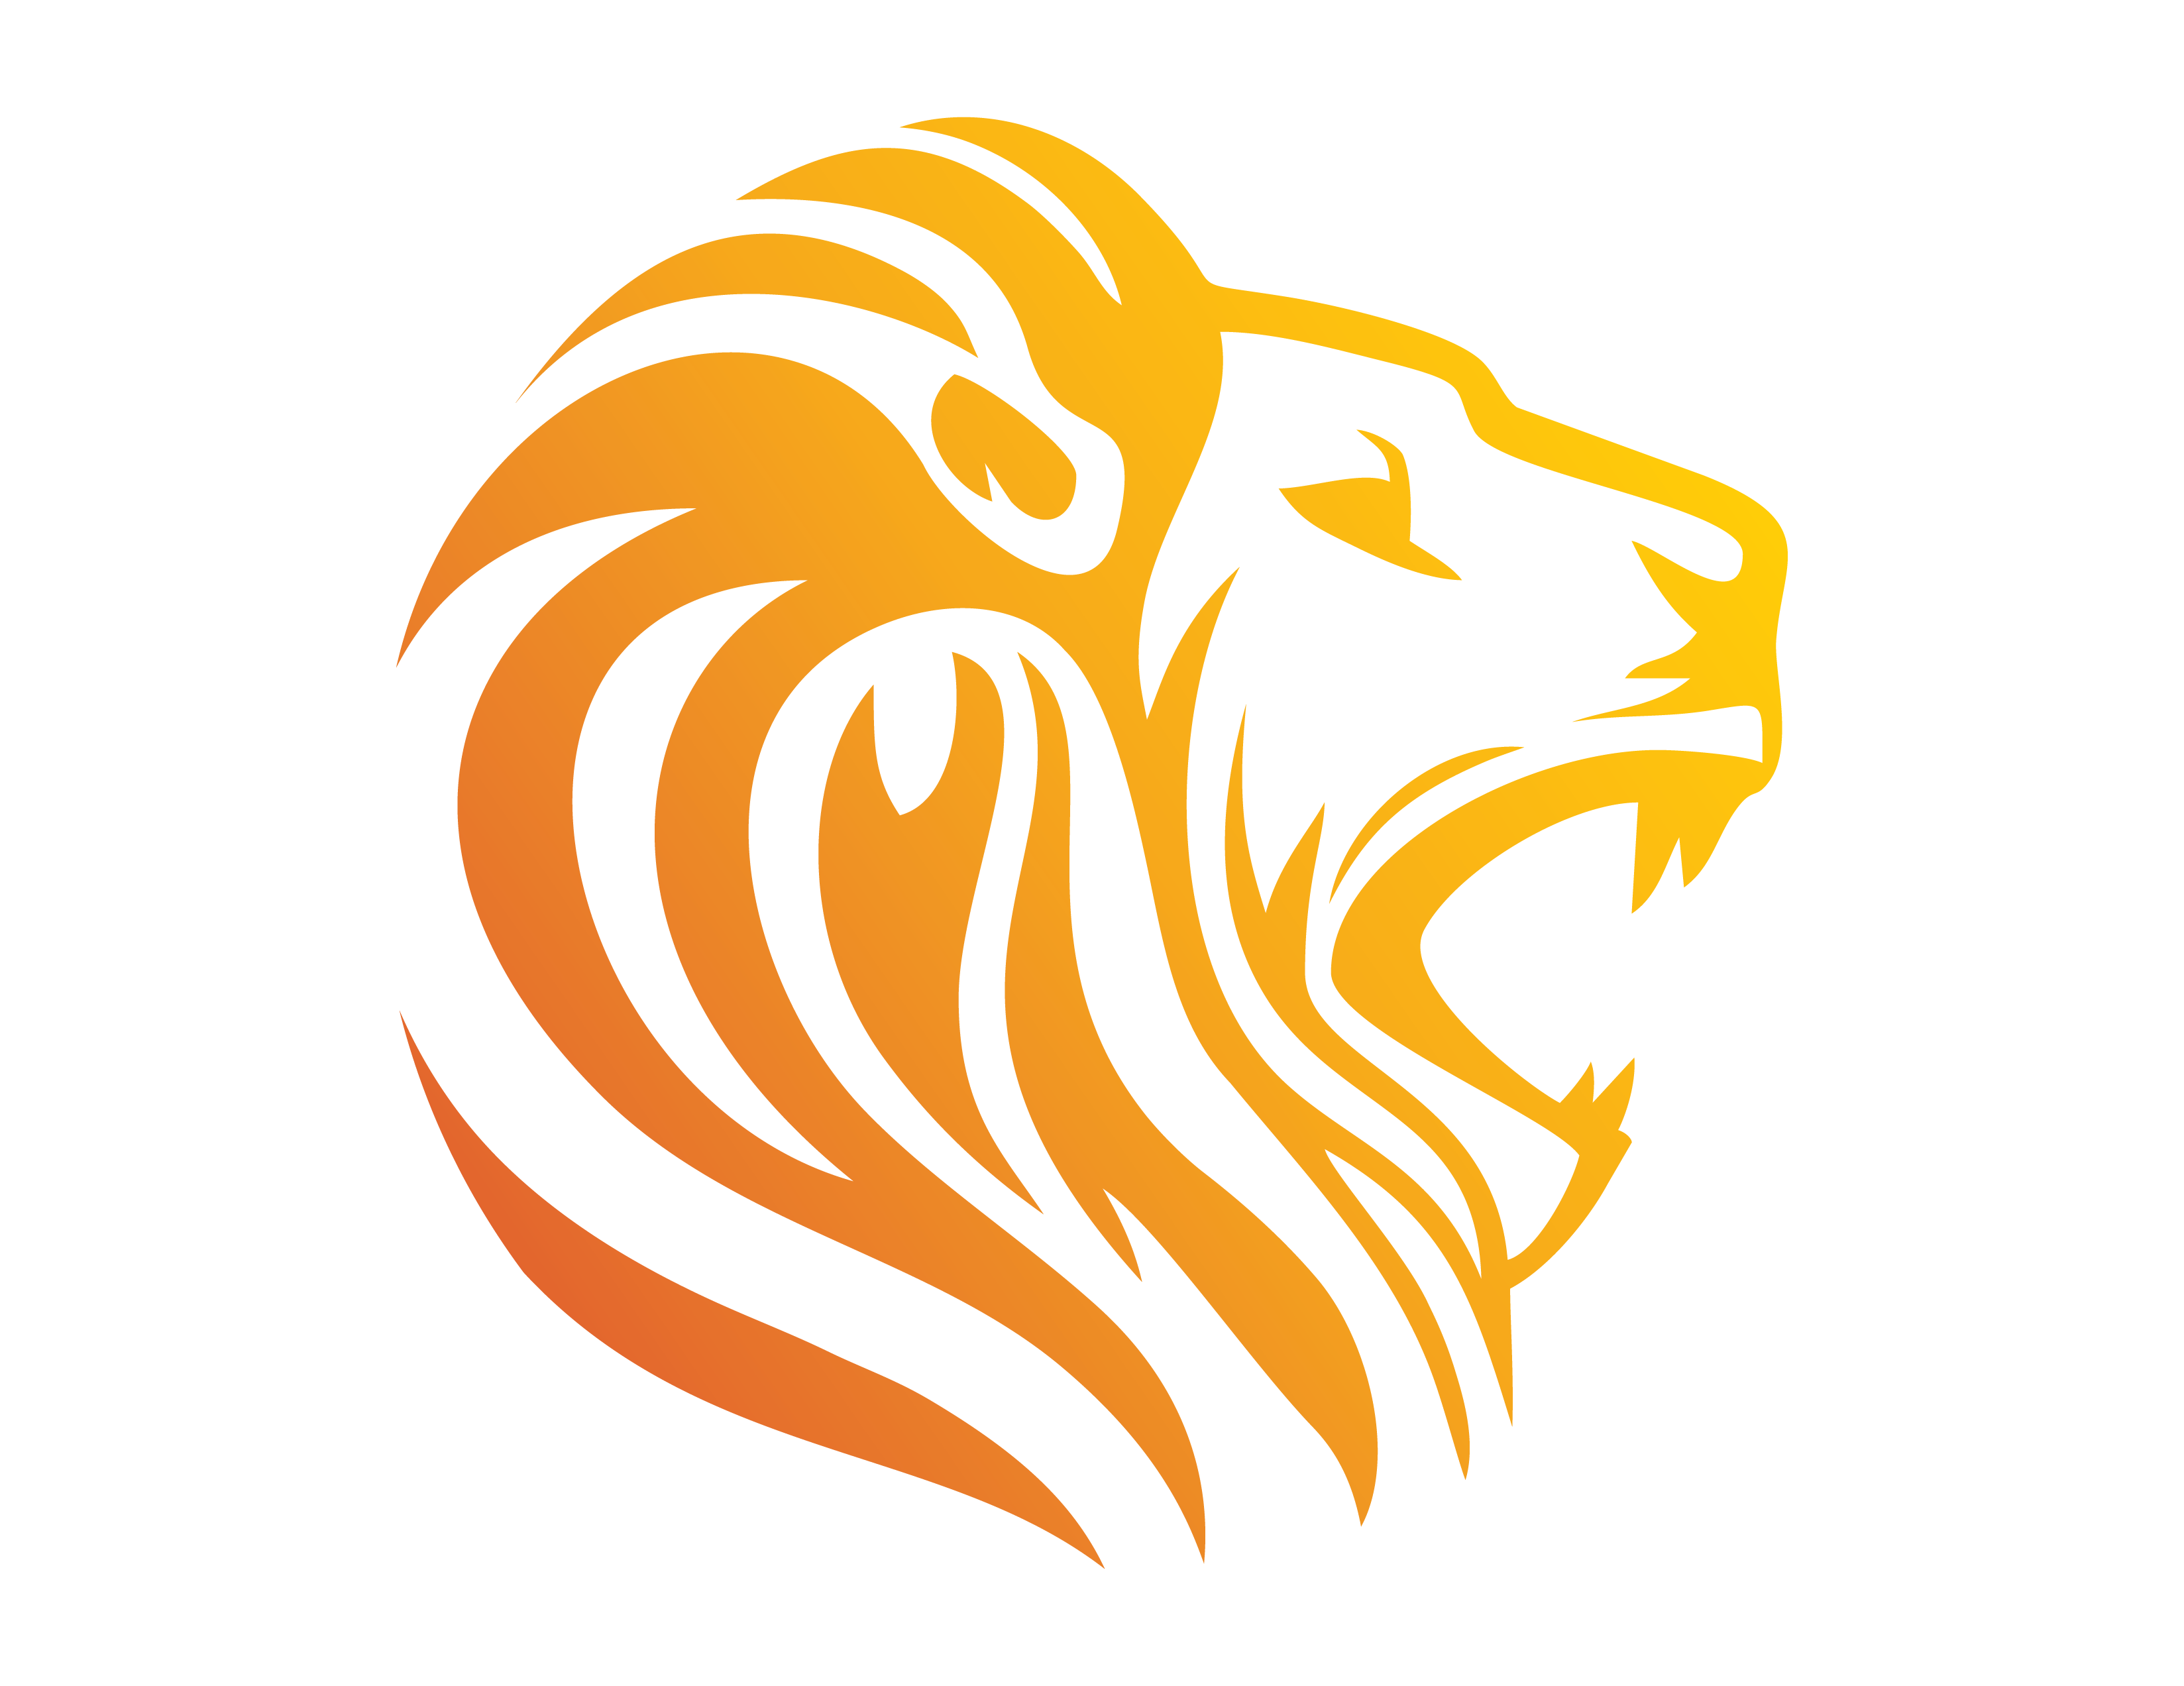 Importance Of Lion Logos In Branding